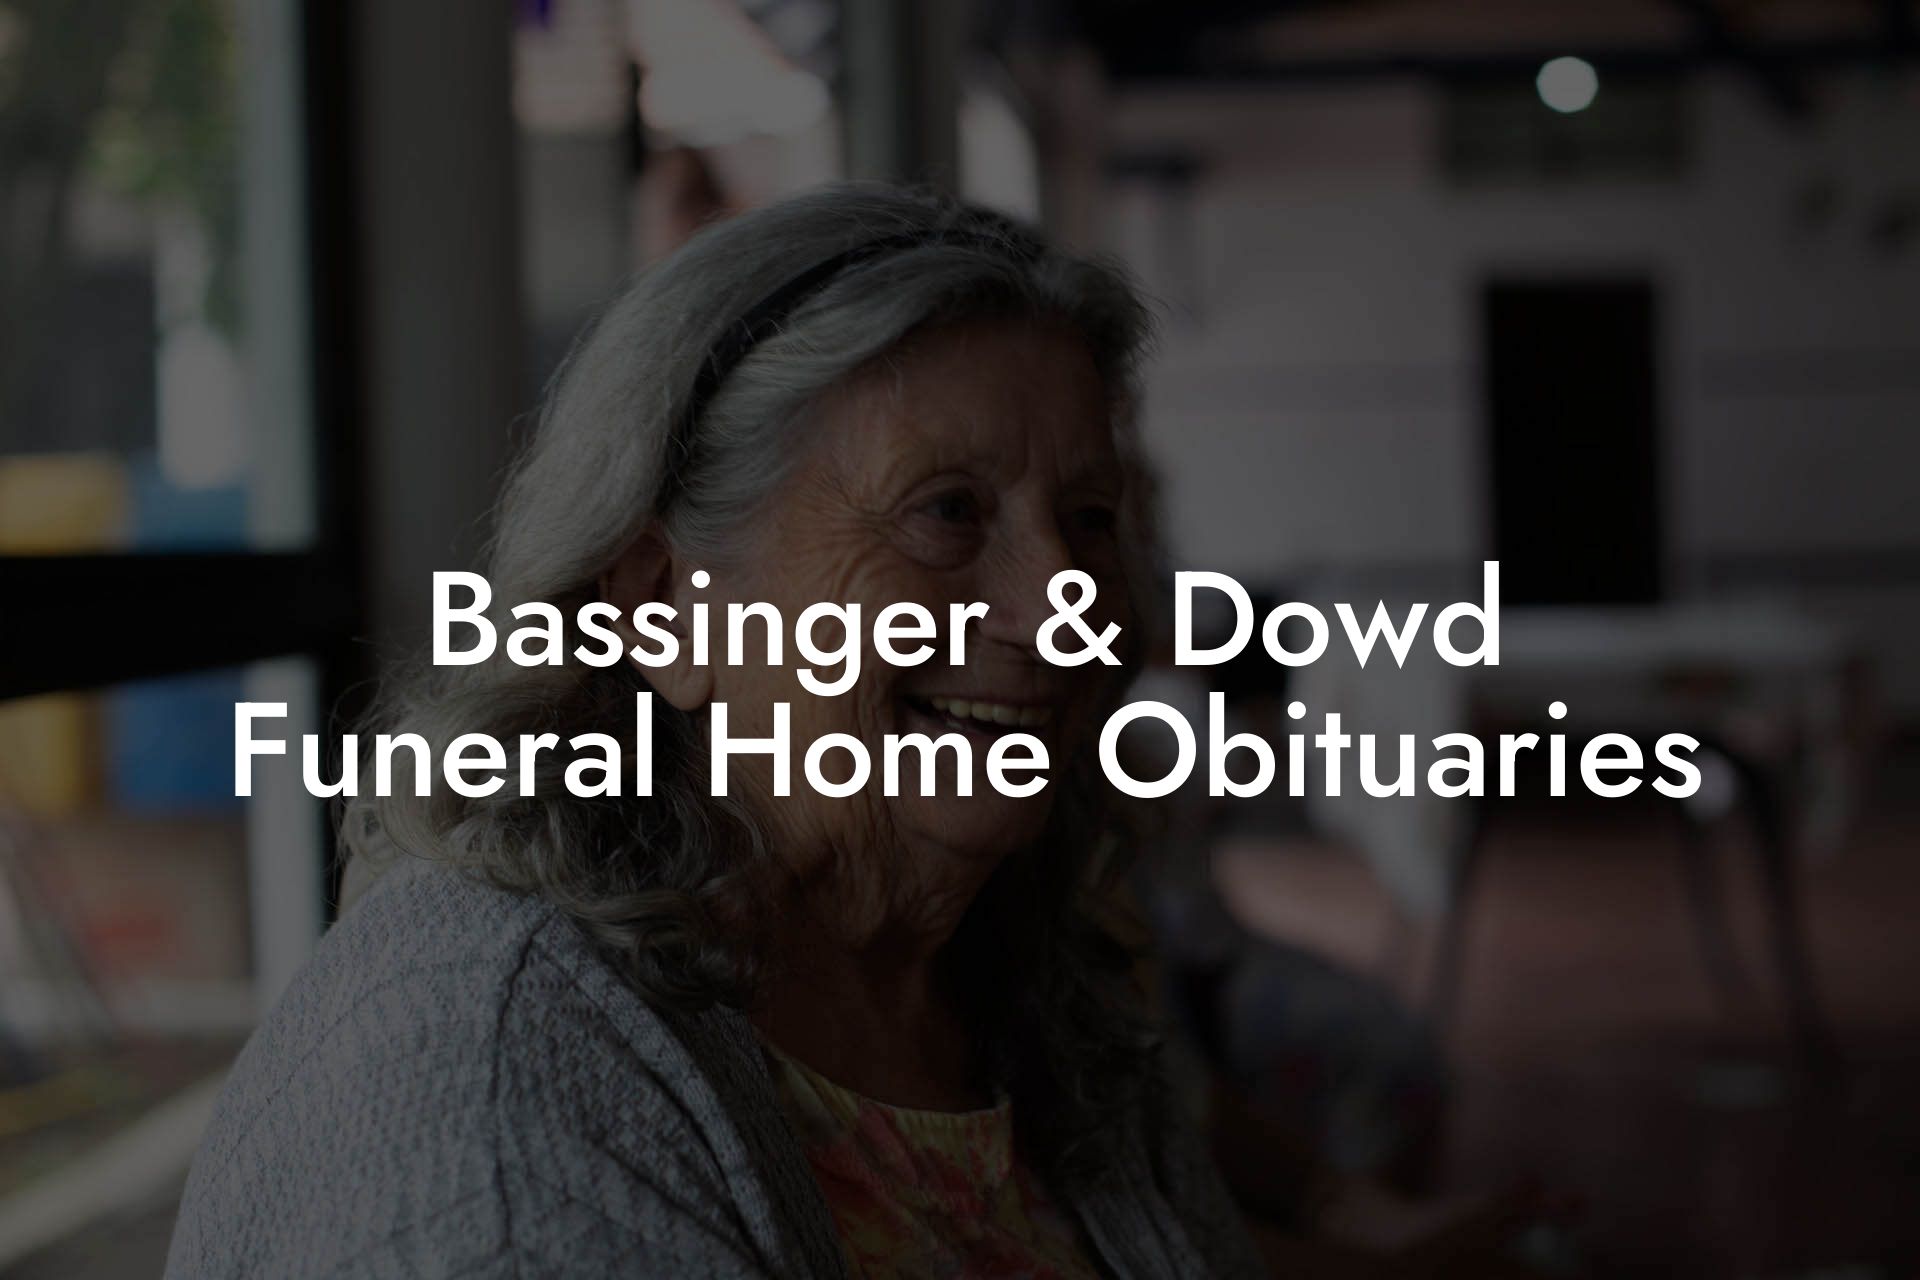 Bassinger & Dowd Funeral Home Obituaries